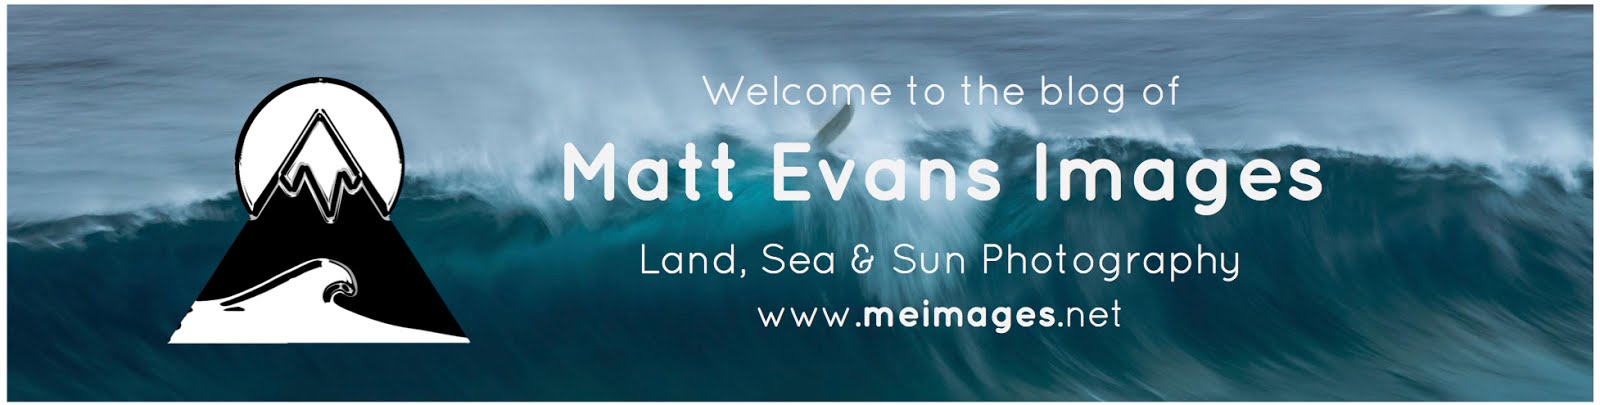 Matt Evans Images